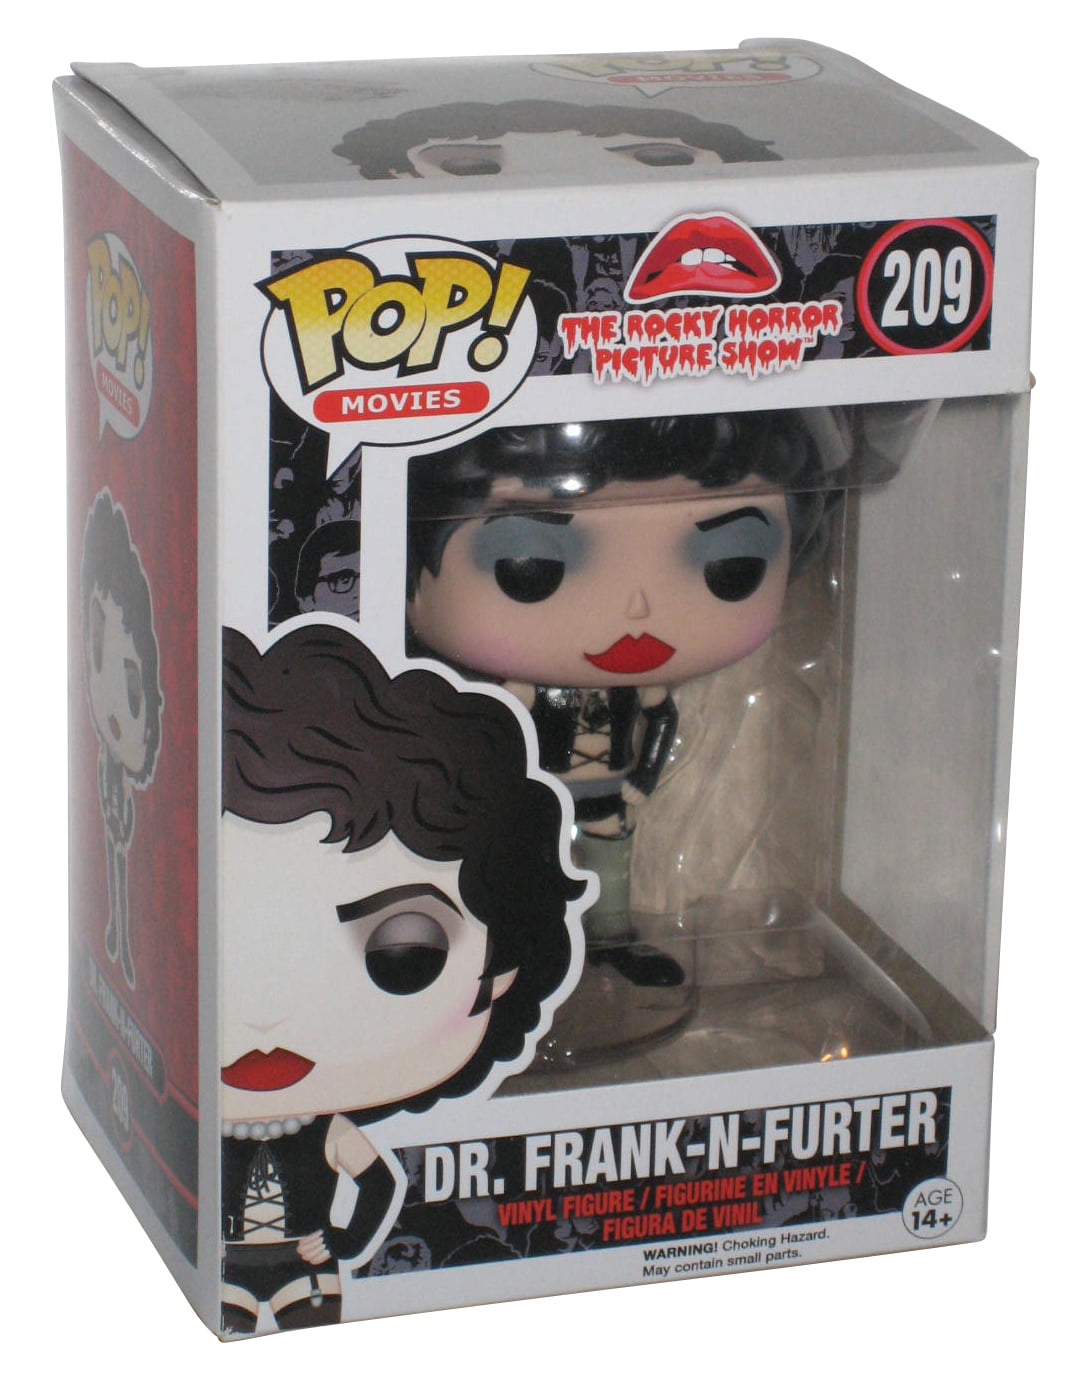 Funko POP! Rocky Horror Picture Show - Vinyl Figure - RIFF RAFF #212  *NON-MINT BOX*:  - Toys, Plush, Trading Cards, Action Figures  & Games online retail store shop sale